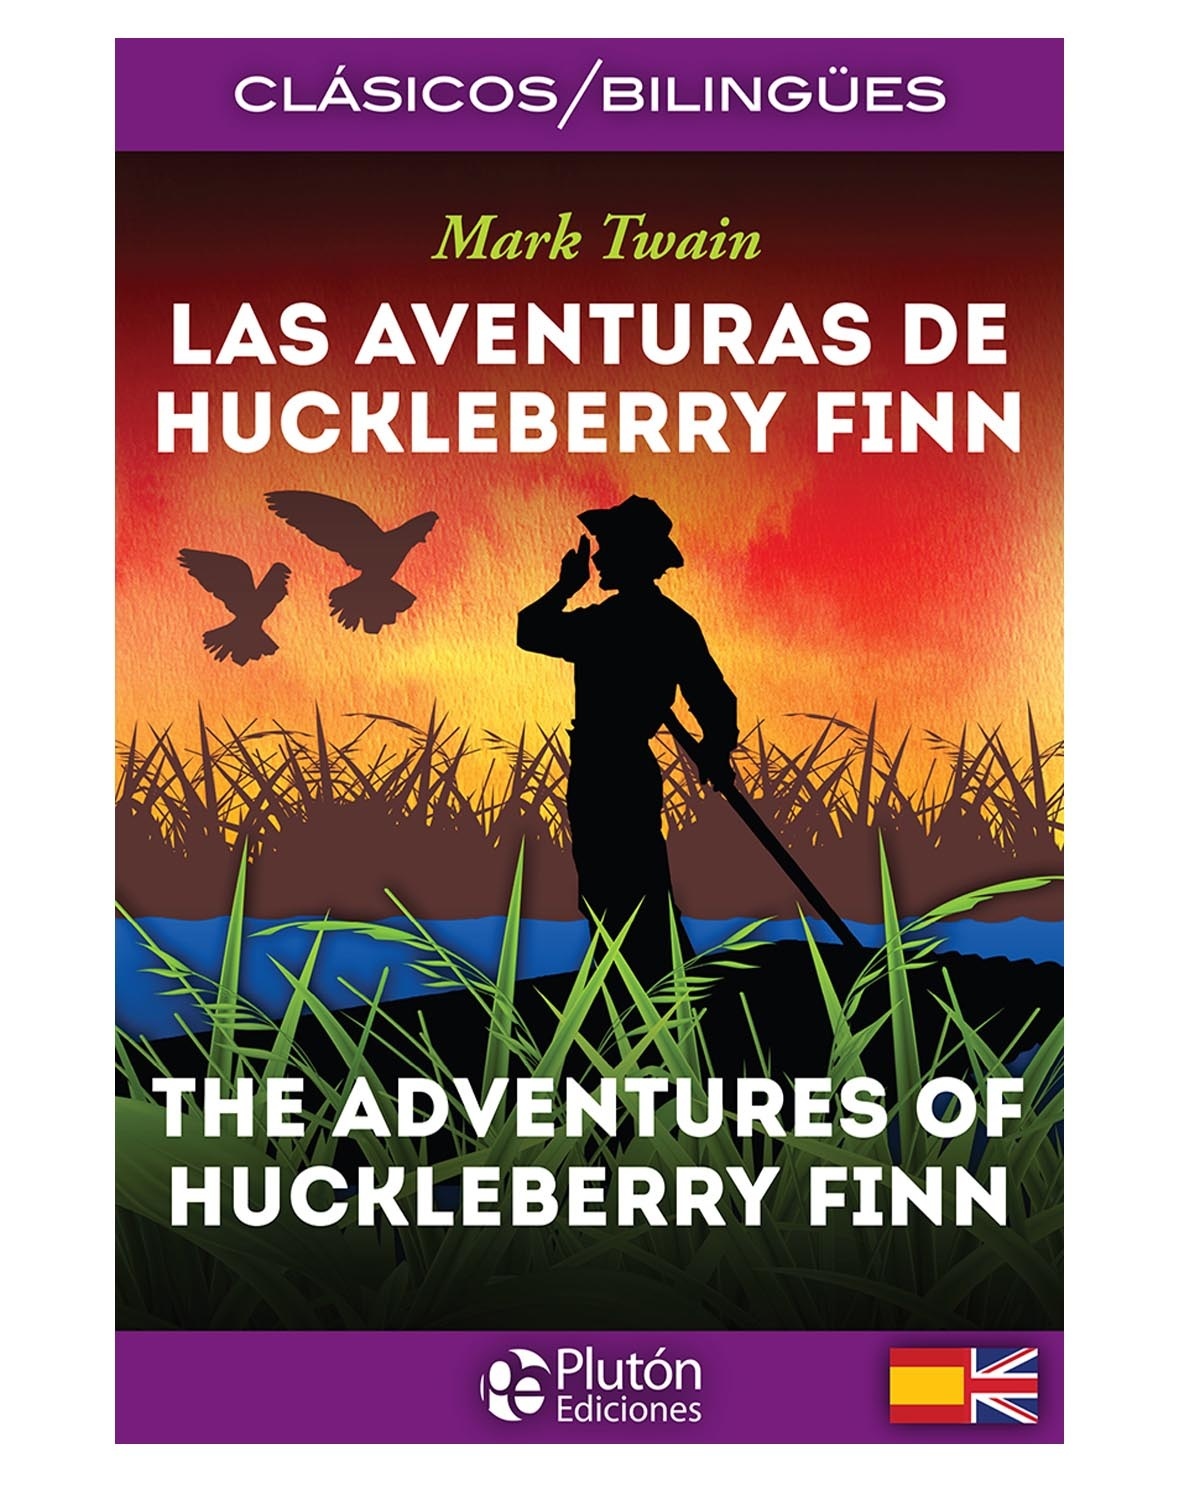 Las Aventuras de Huckleberry Finn / The Adventures of Huckleberry Finn